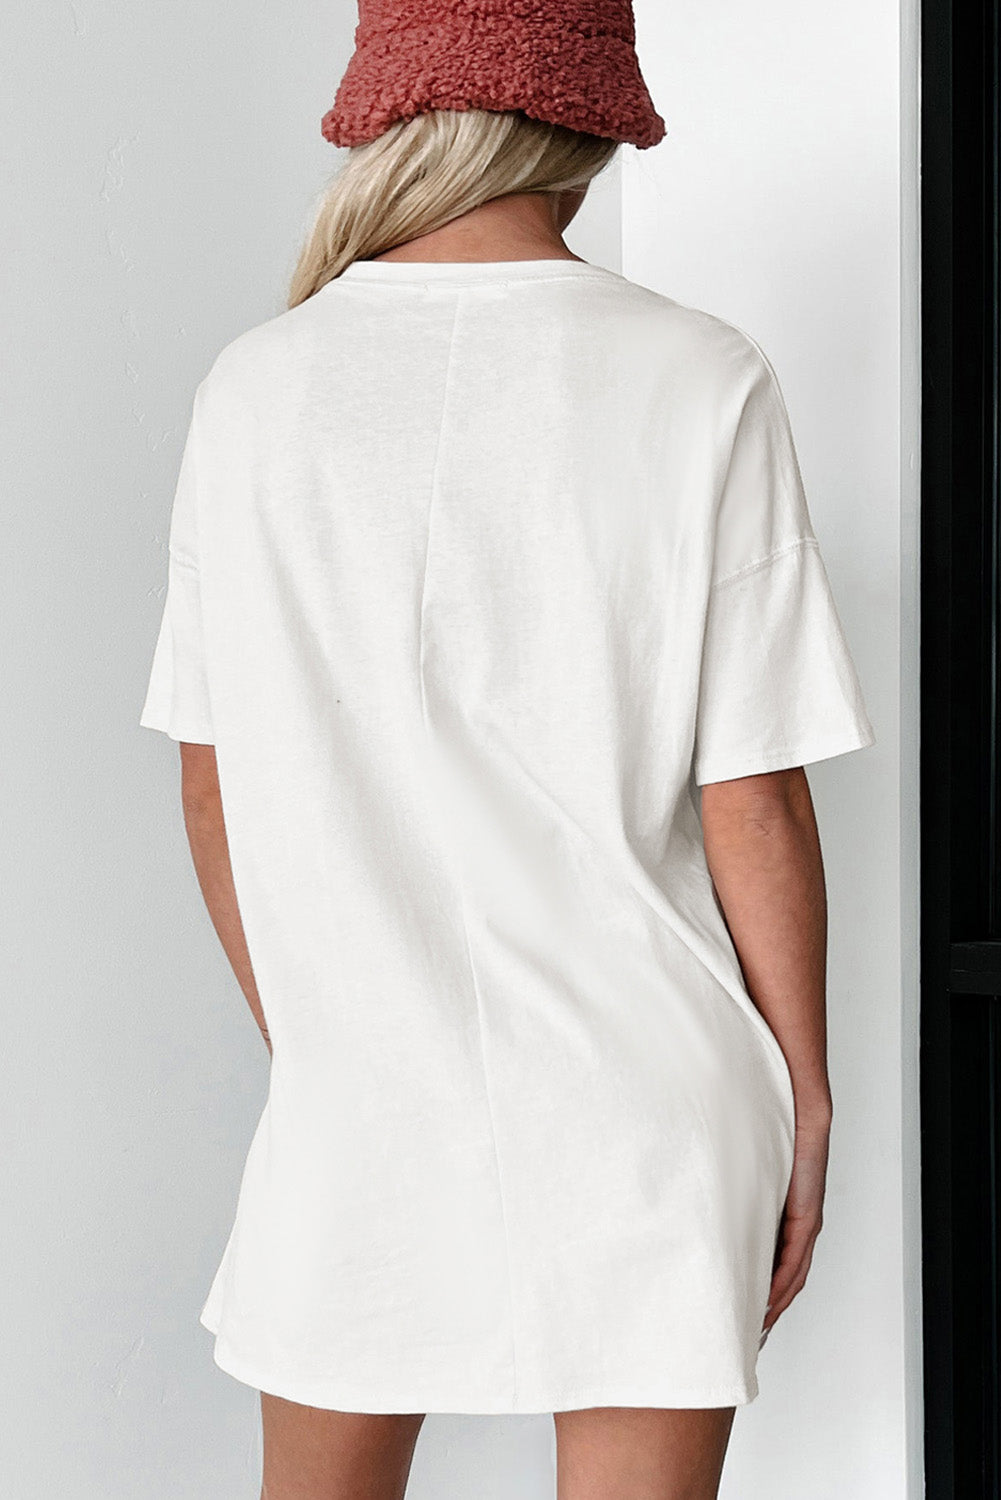 White AMERICA Stars Print Round Neck Oversized T Shirt Graphic Tees JT's Designer Fashion